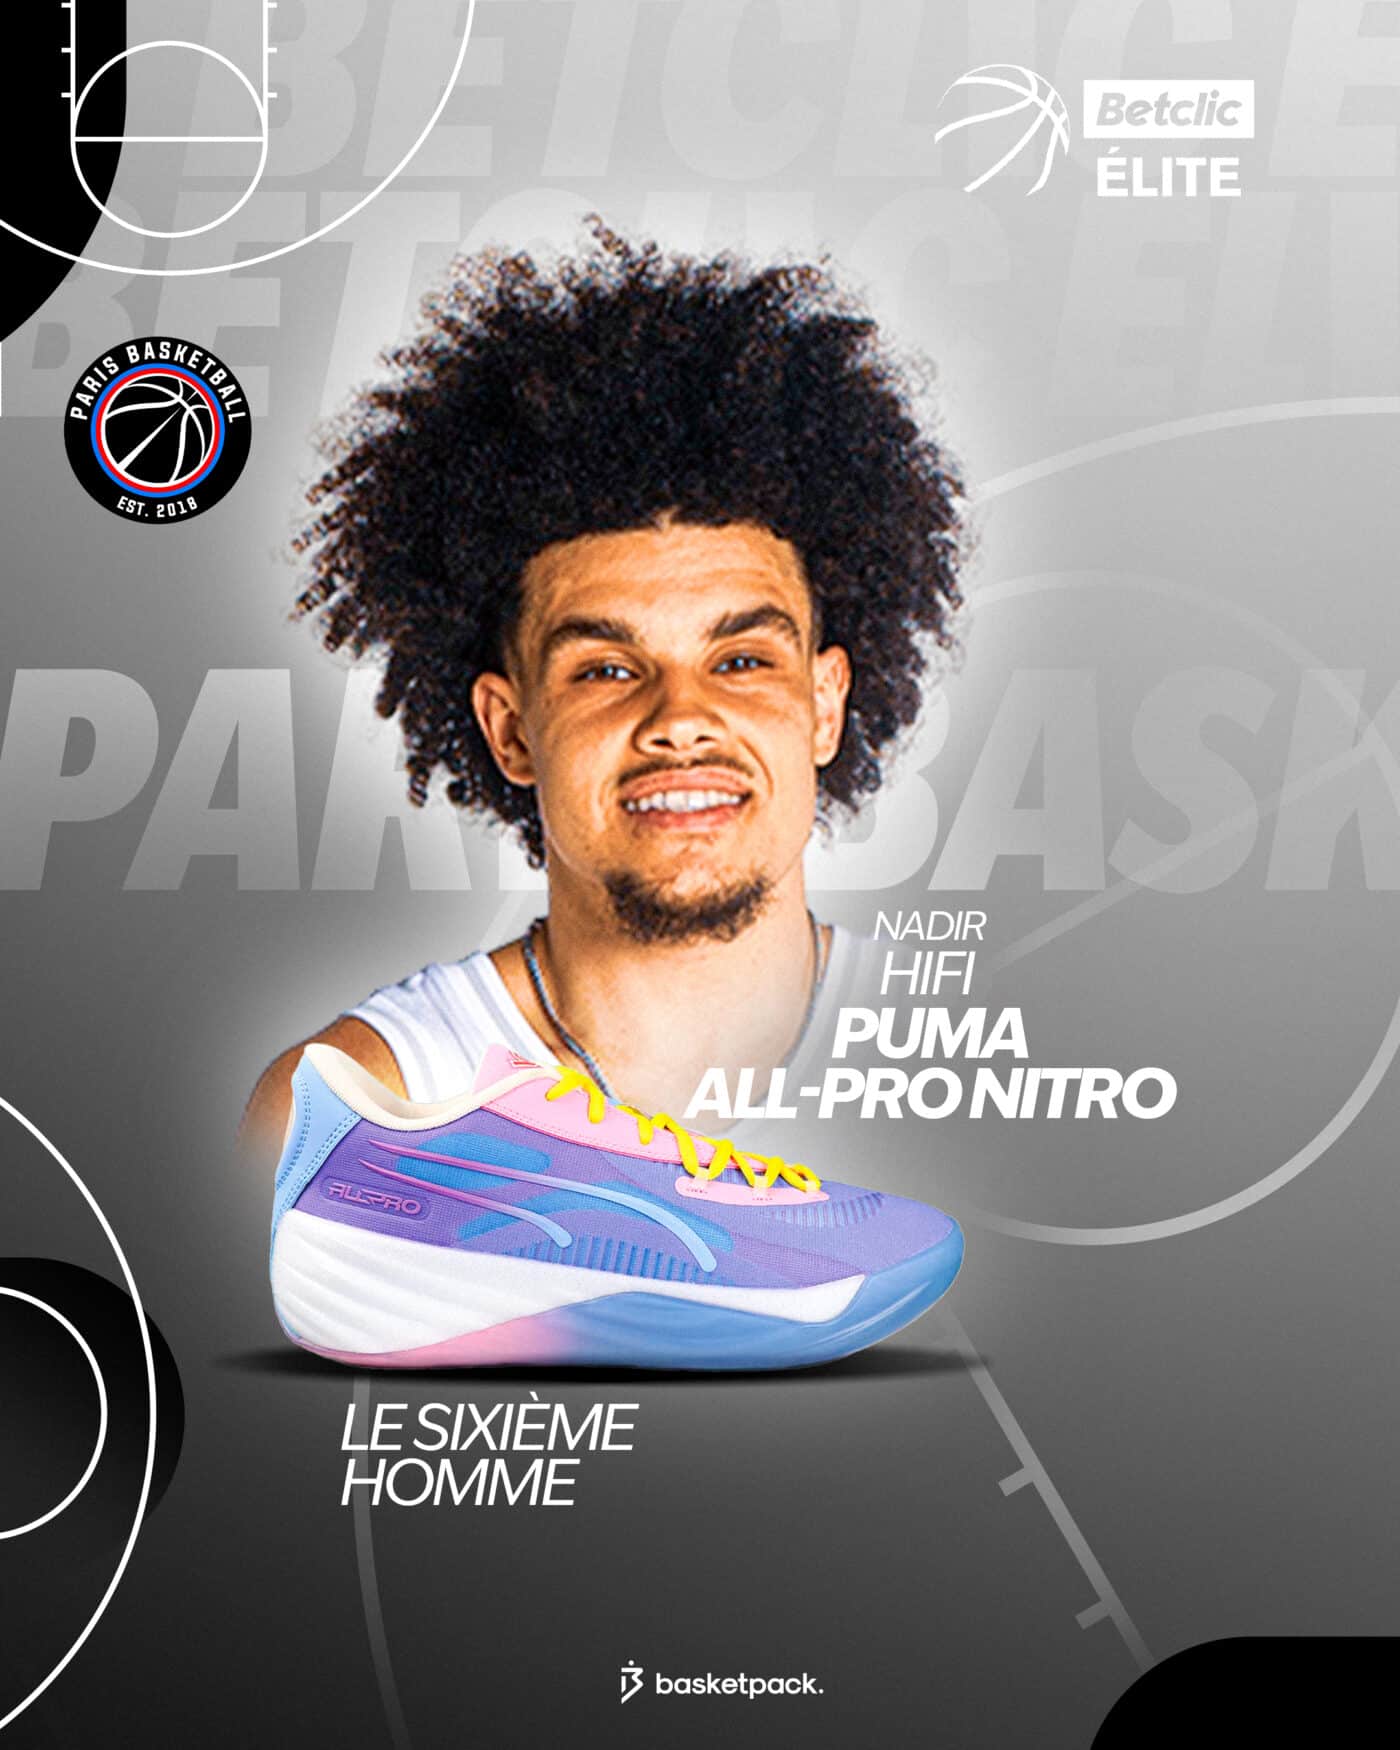 finale betclic elite chaussures paris basketball